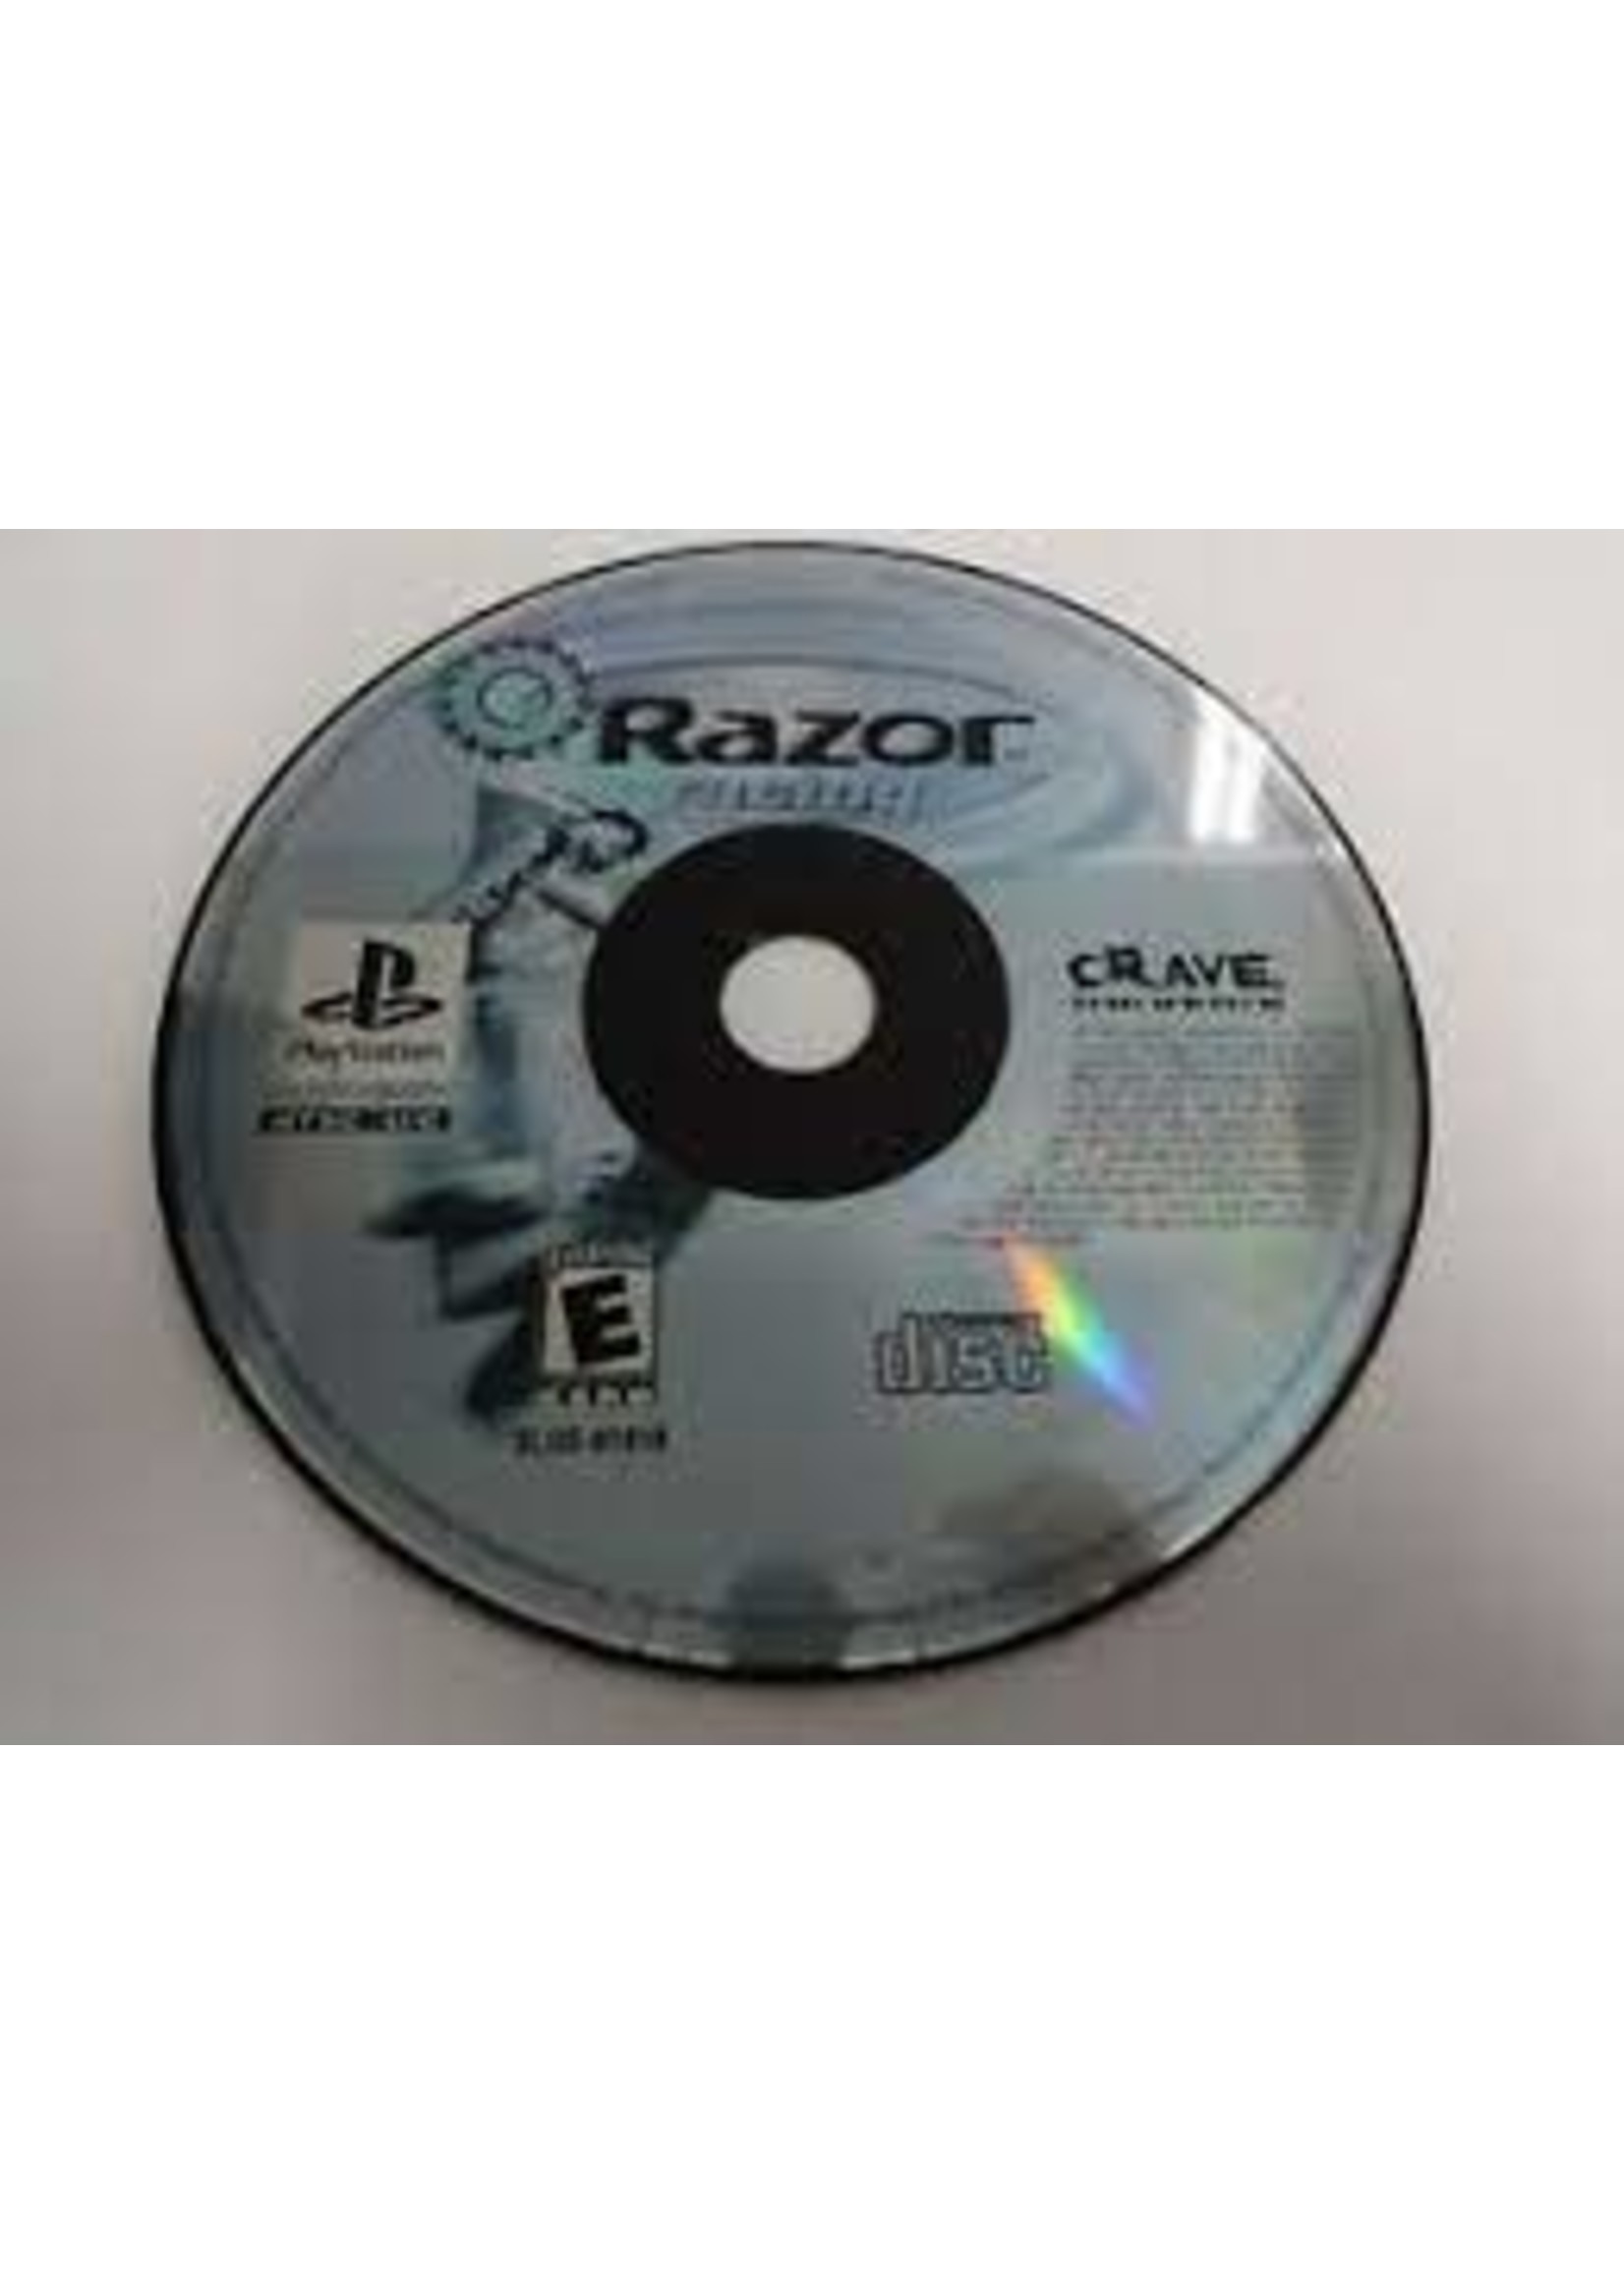 Sony Playstation 1 (PS1) Razor Racing - Print